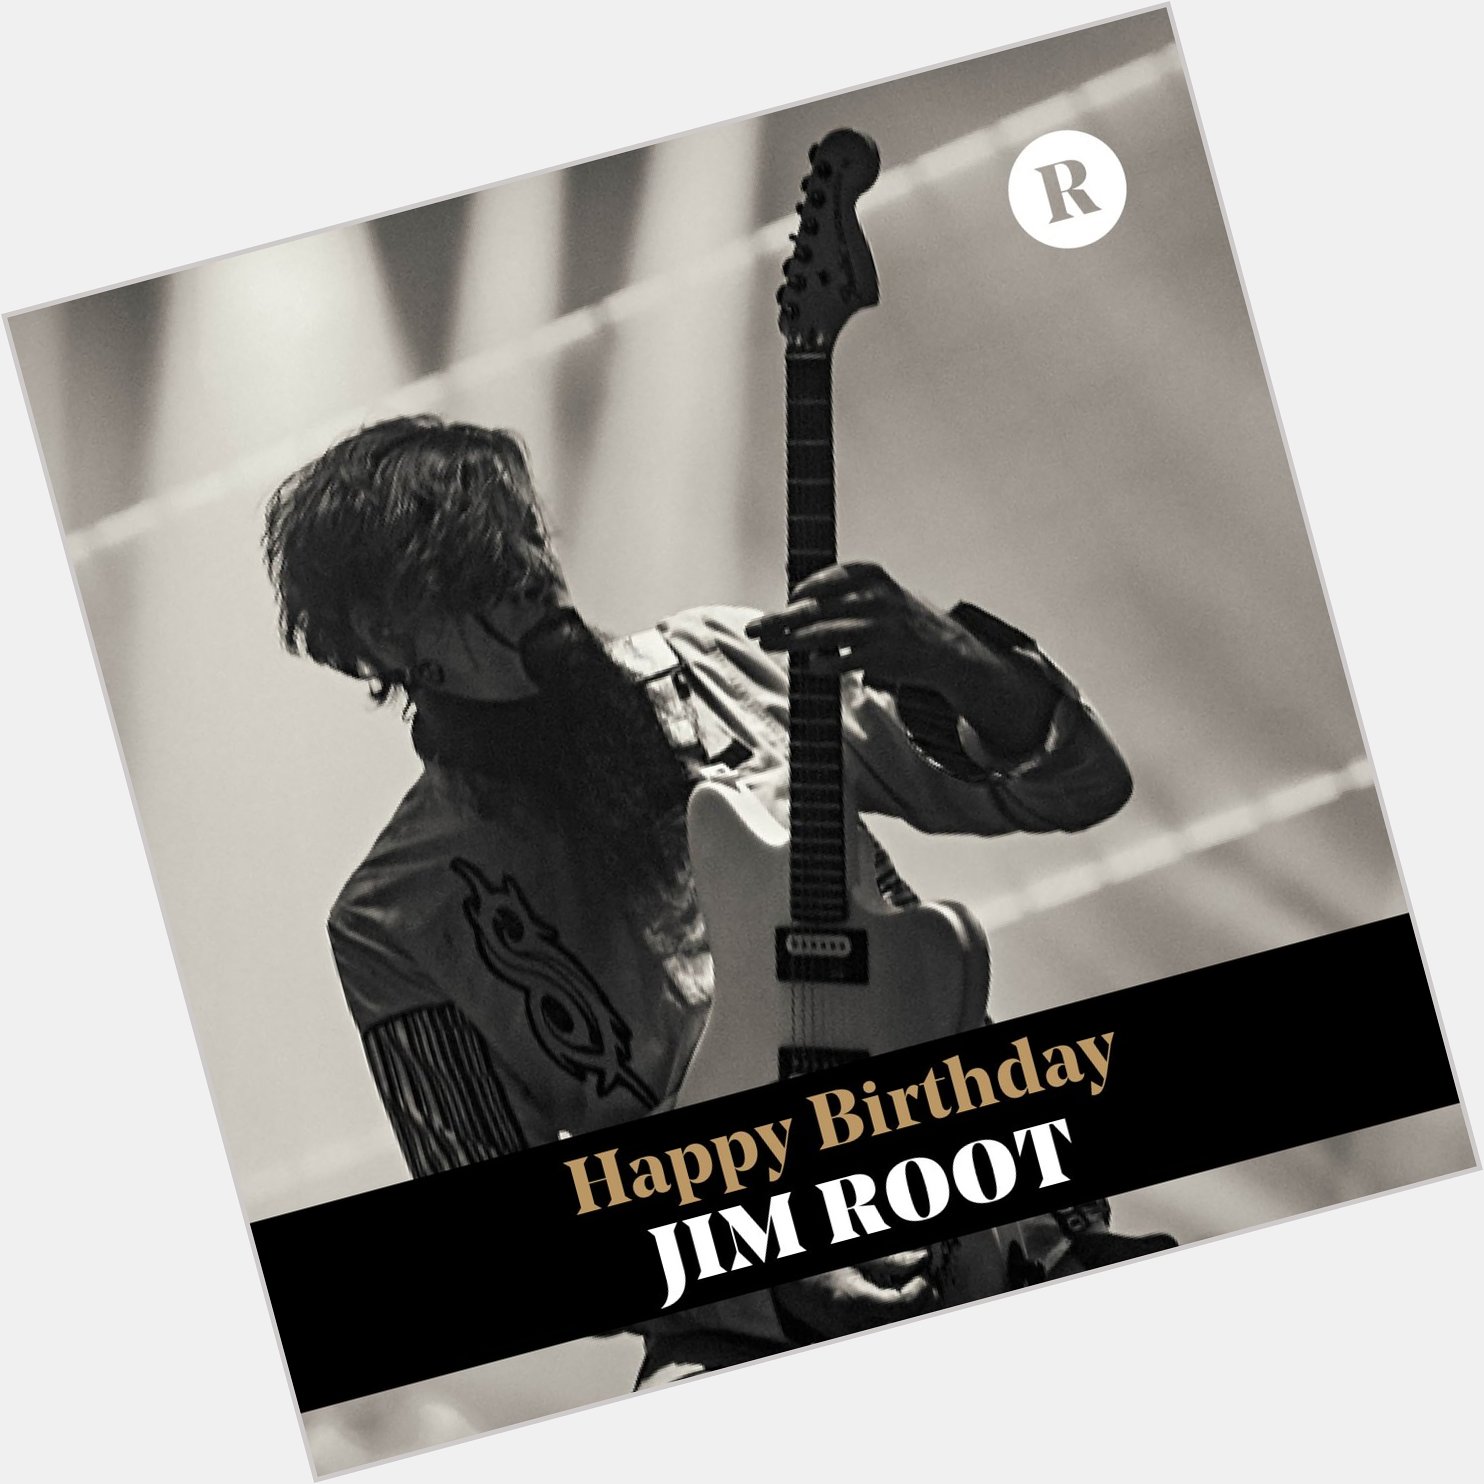 Happy birthday, Jim Root! 